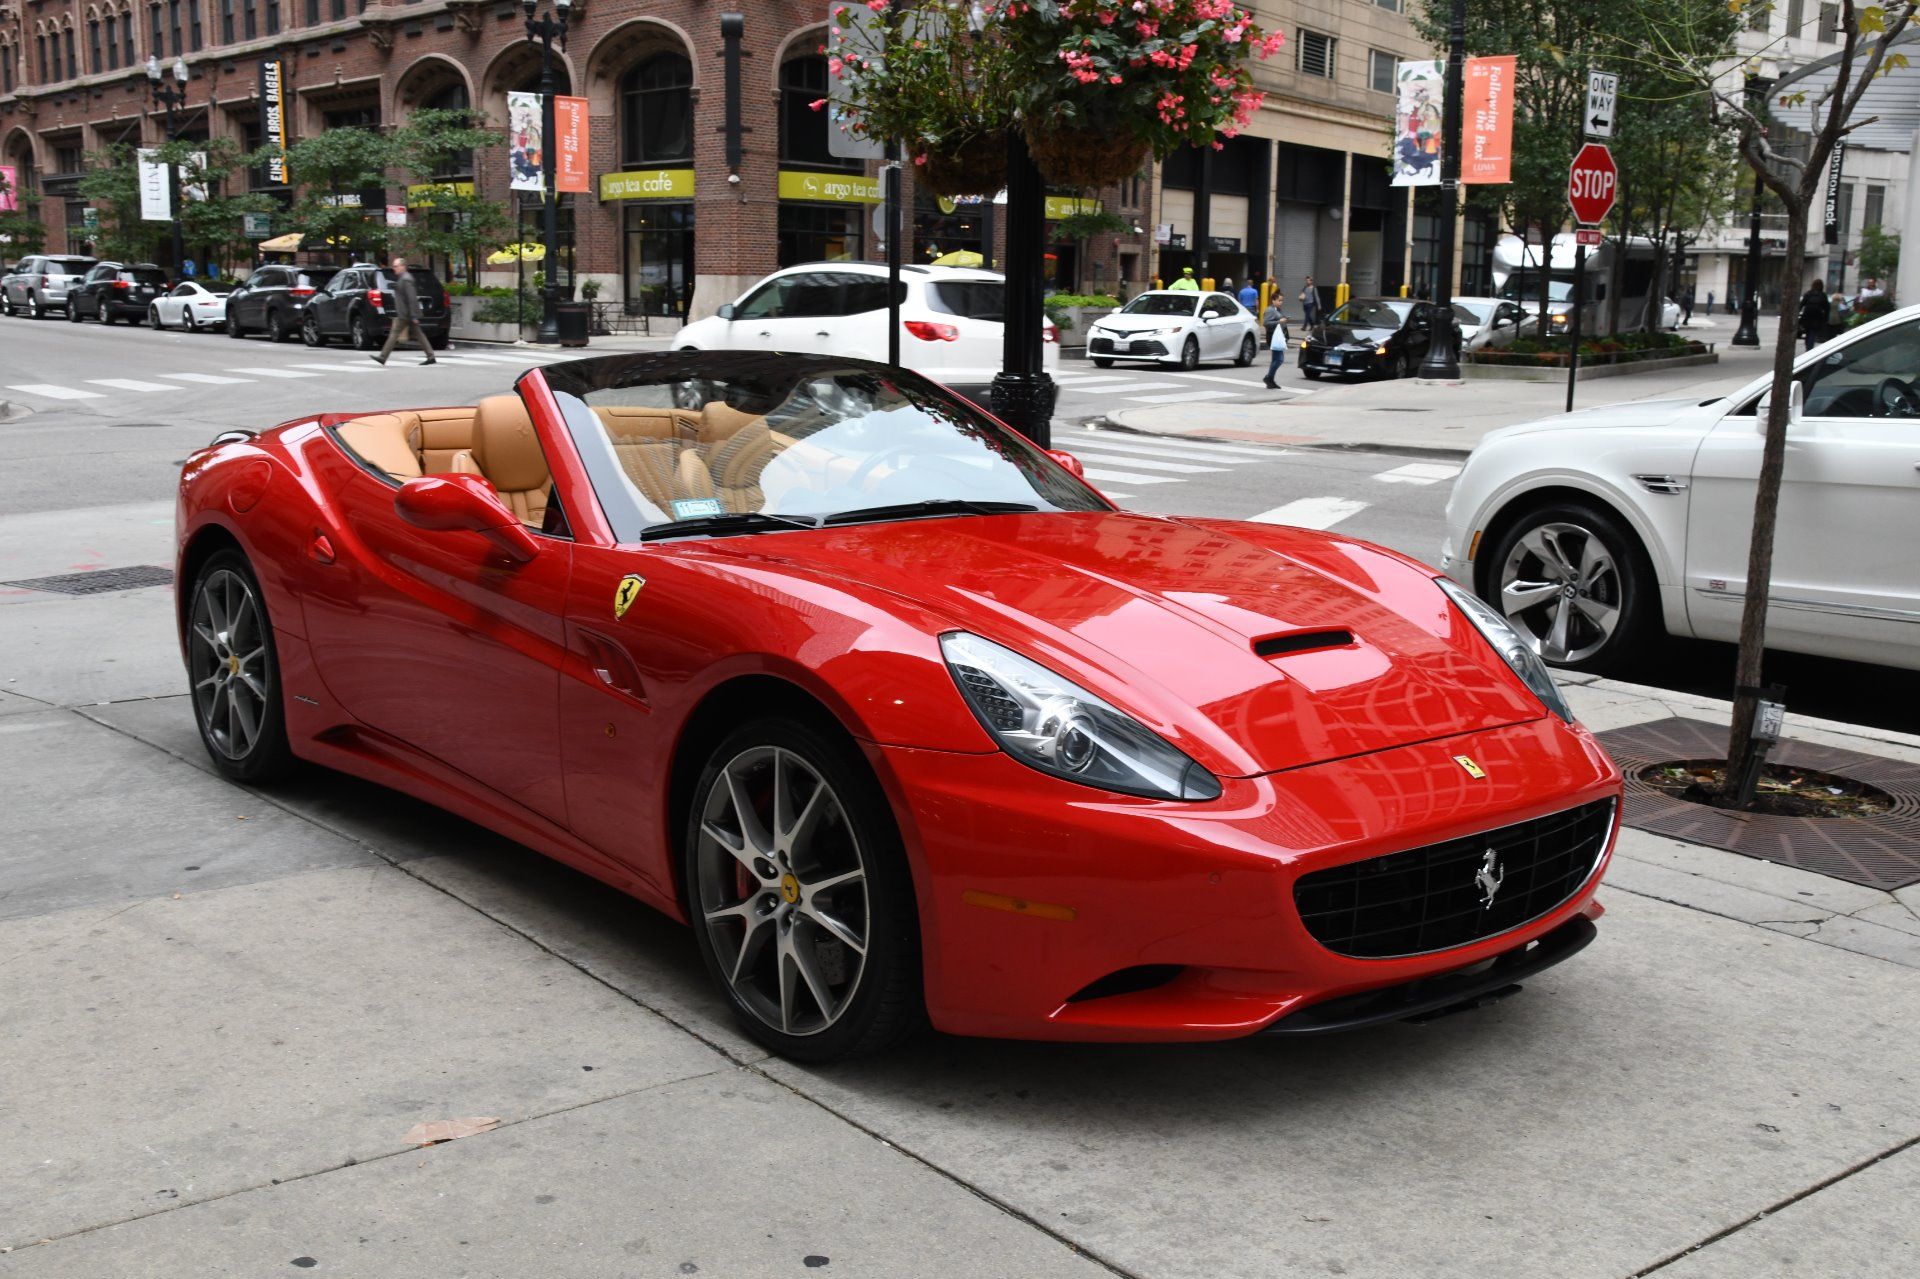 the 2012 Ferrari California parked outside